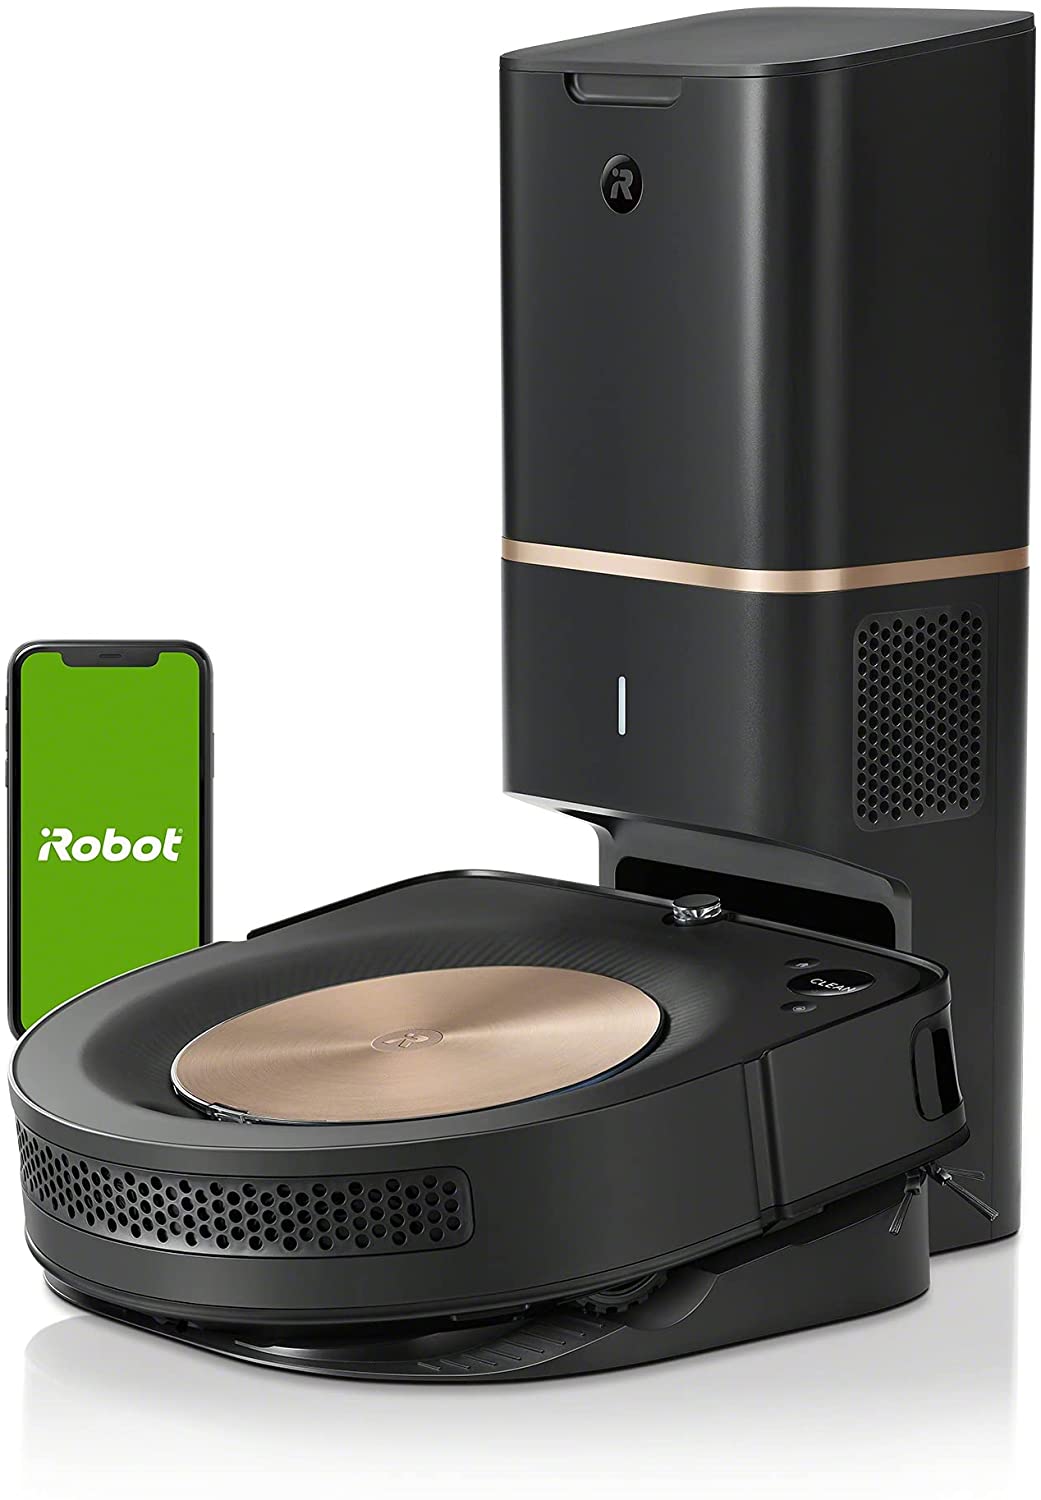 Roomba s9+ versus Roomba Combo i8+ versus Roomba Combo j7+